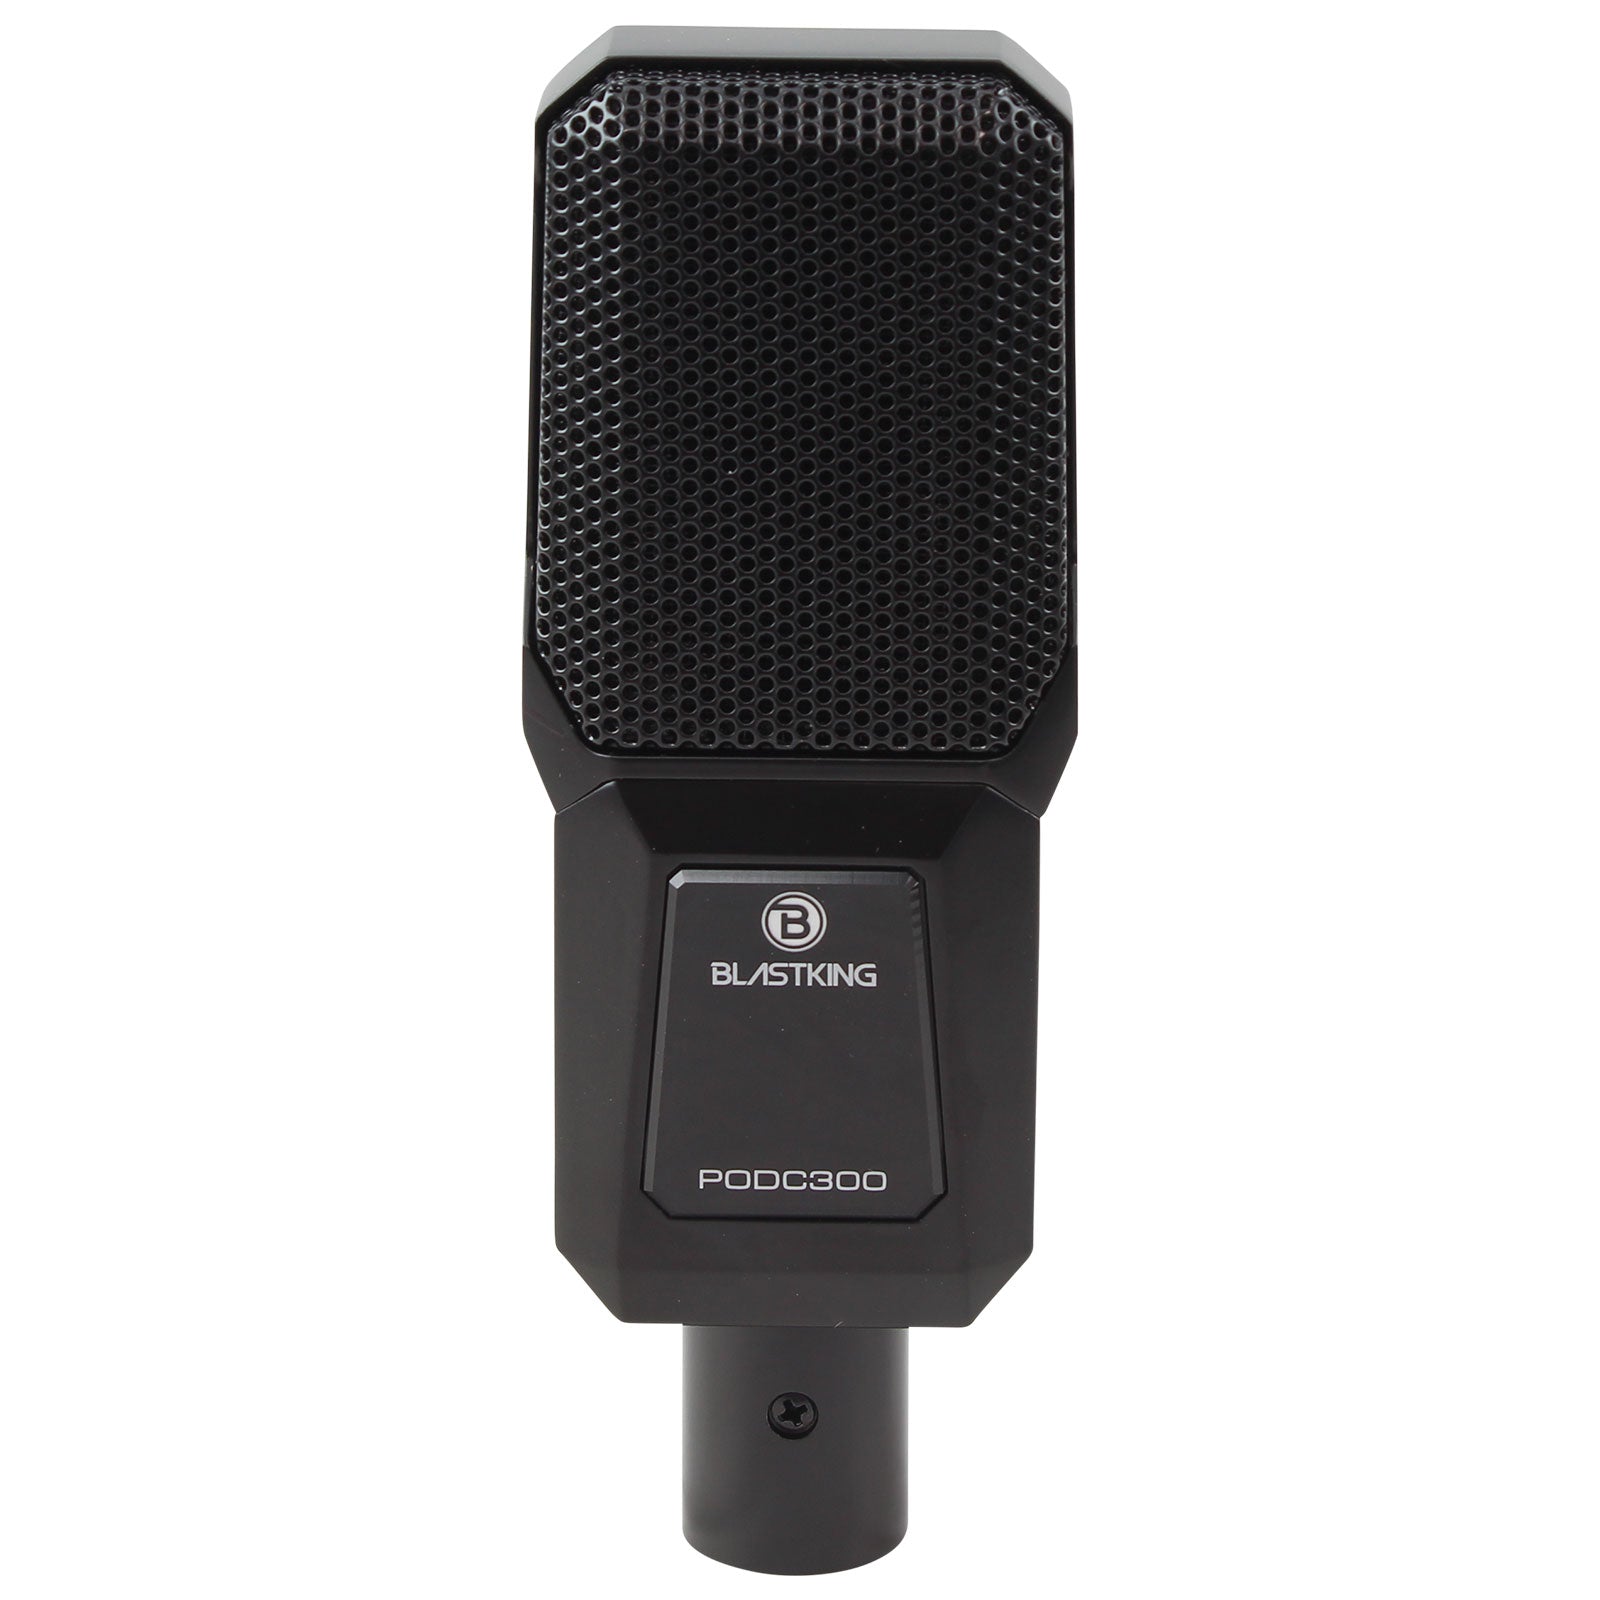 Blastking PODC300 Podcaster Condenser Microphone